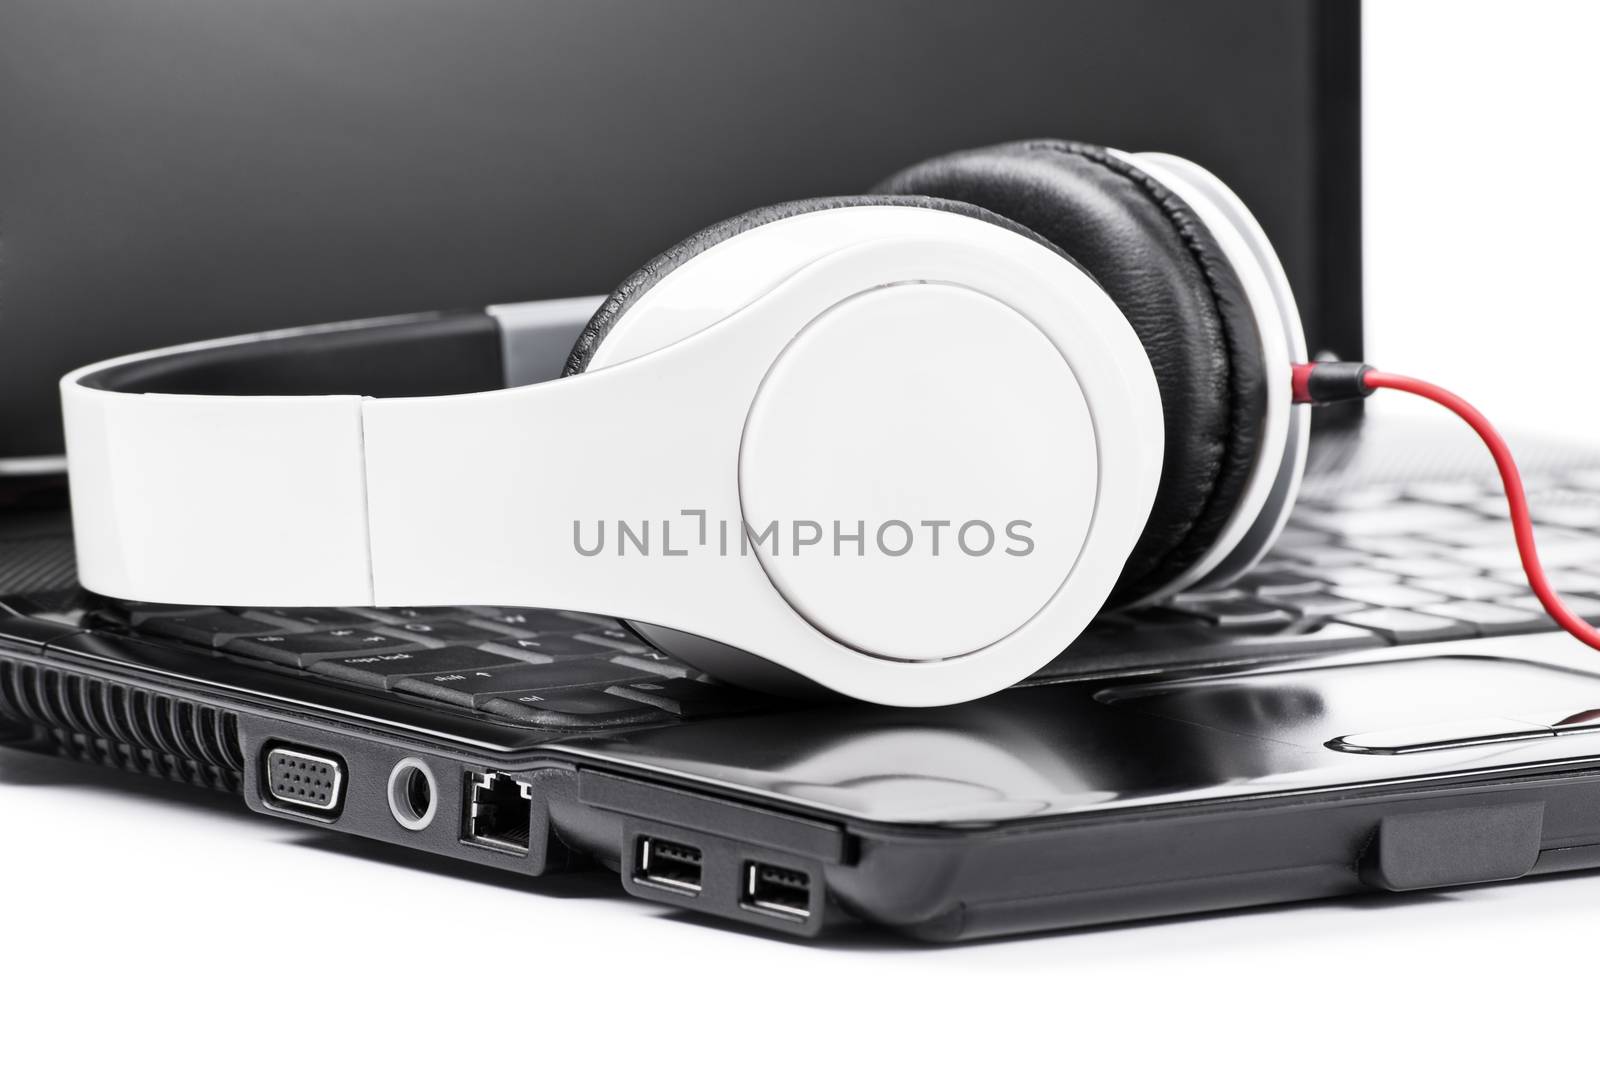 Headphones on a laptop by Mendelex